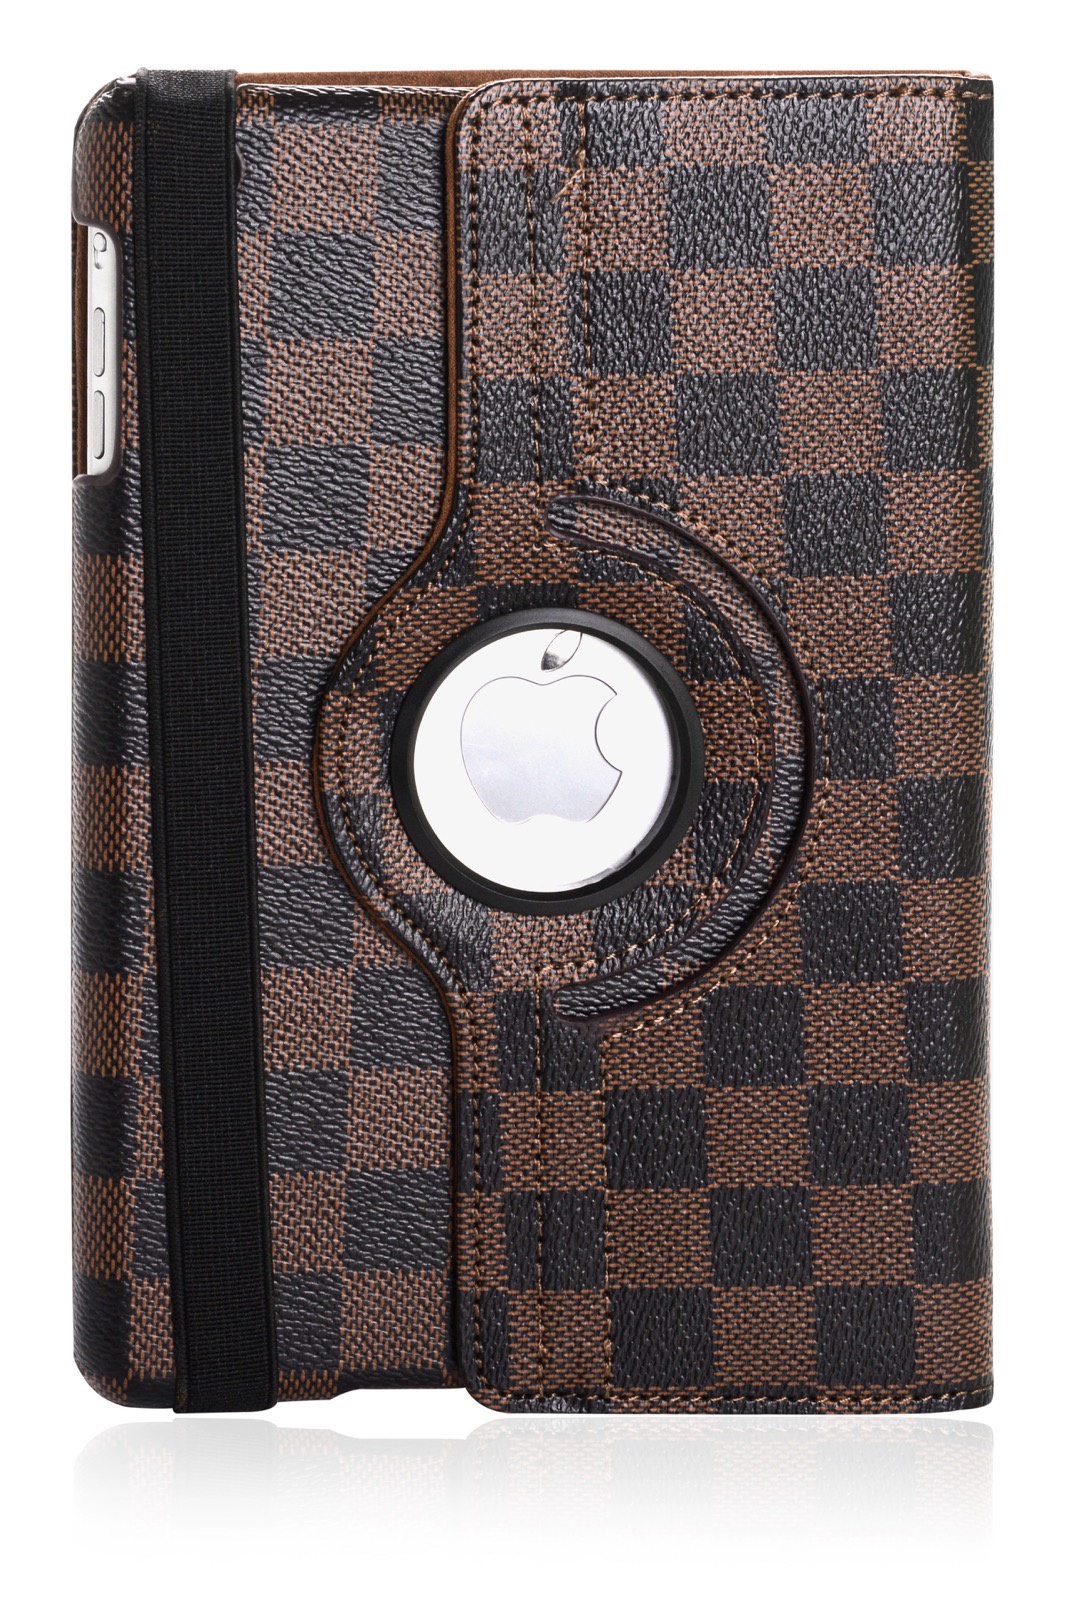 фото Чехол для планшета Gurdini книжка 410065 поворотный 360 в шашечку для Apple iPad mini 1/2/3 7.9", коричневый